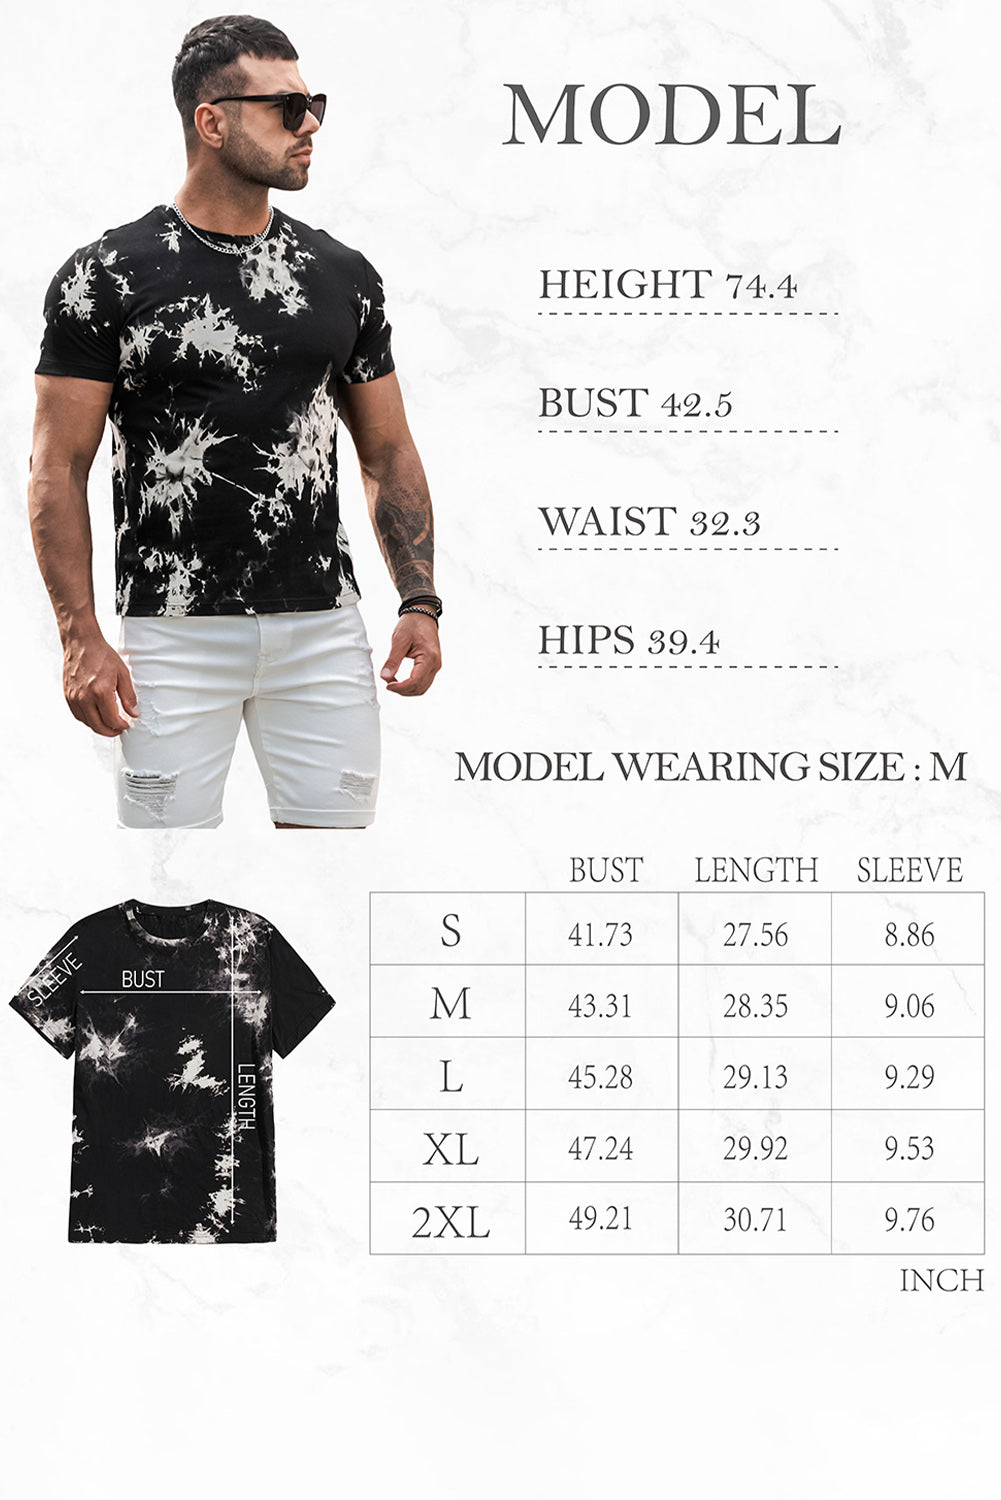 Black I DESTROY SILENCE Graphic Print Short Sleeve Men's T Shirt Men's Tops JT's Designer Fashion